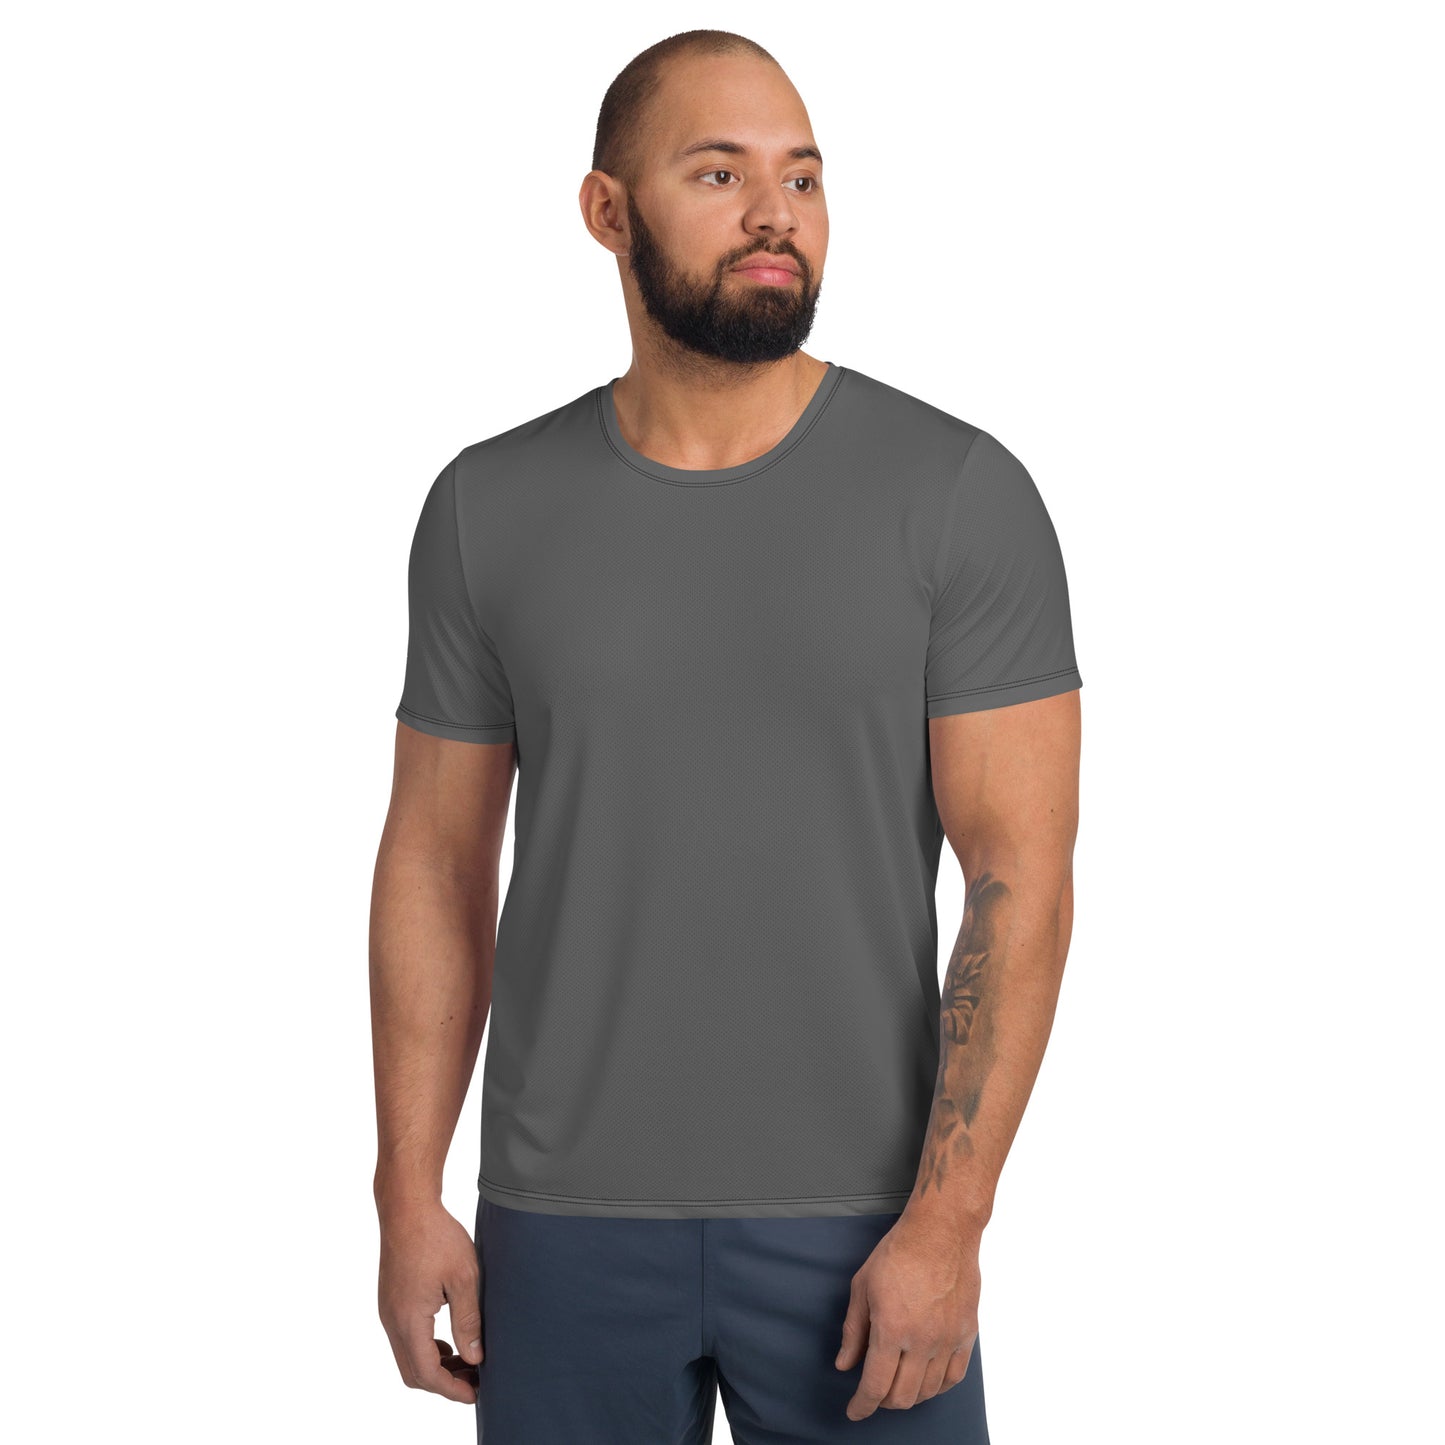 Humble Sportswear, men's activewear mesh tops, color match tops, moisture control shirts for men